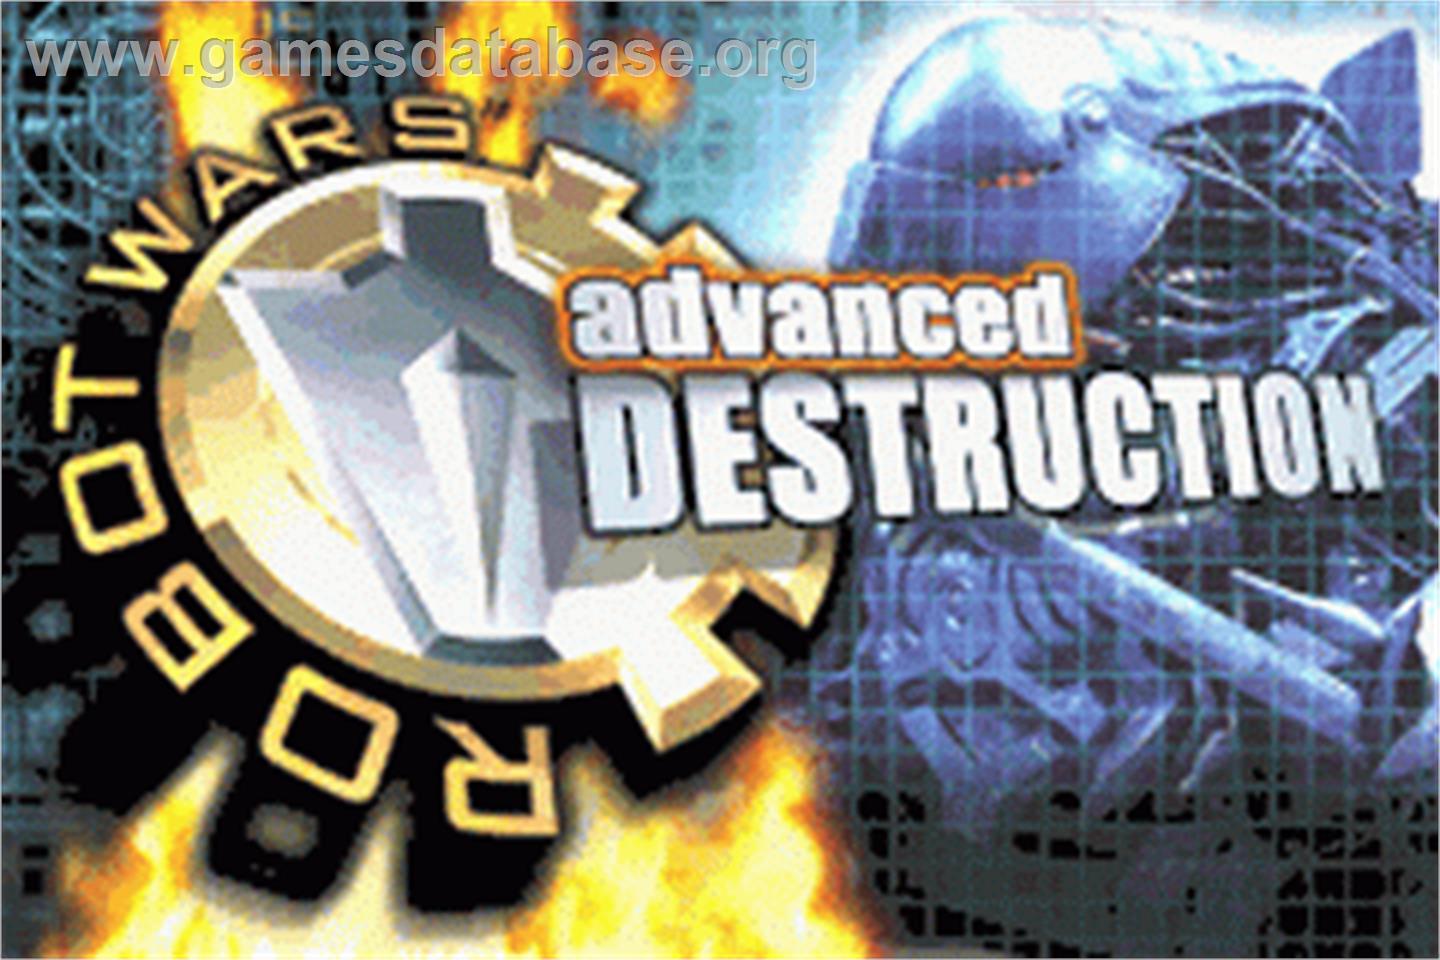 Robot Wars: Advanced Destruction - Nintendo Game Boy Advance - Artwork - Title Screen